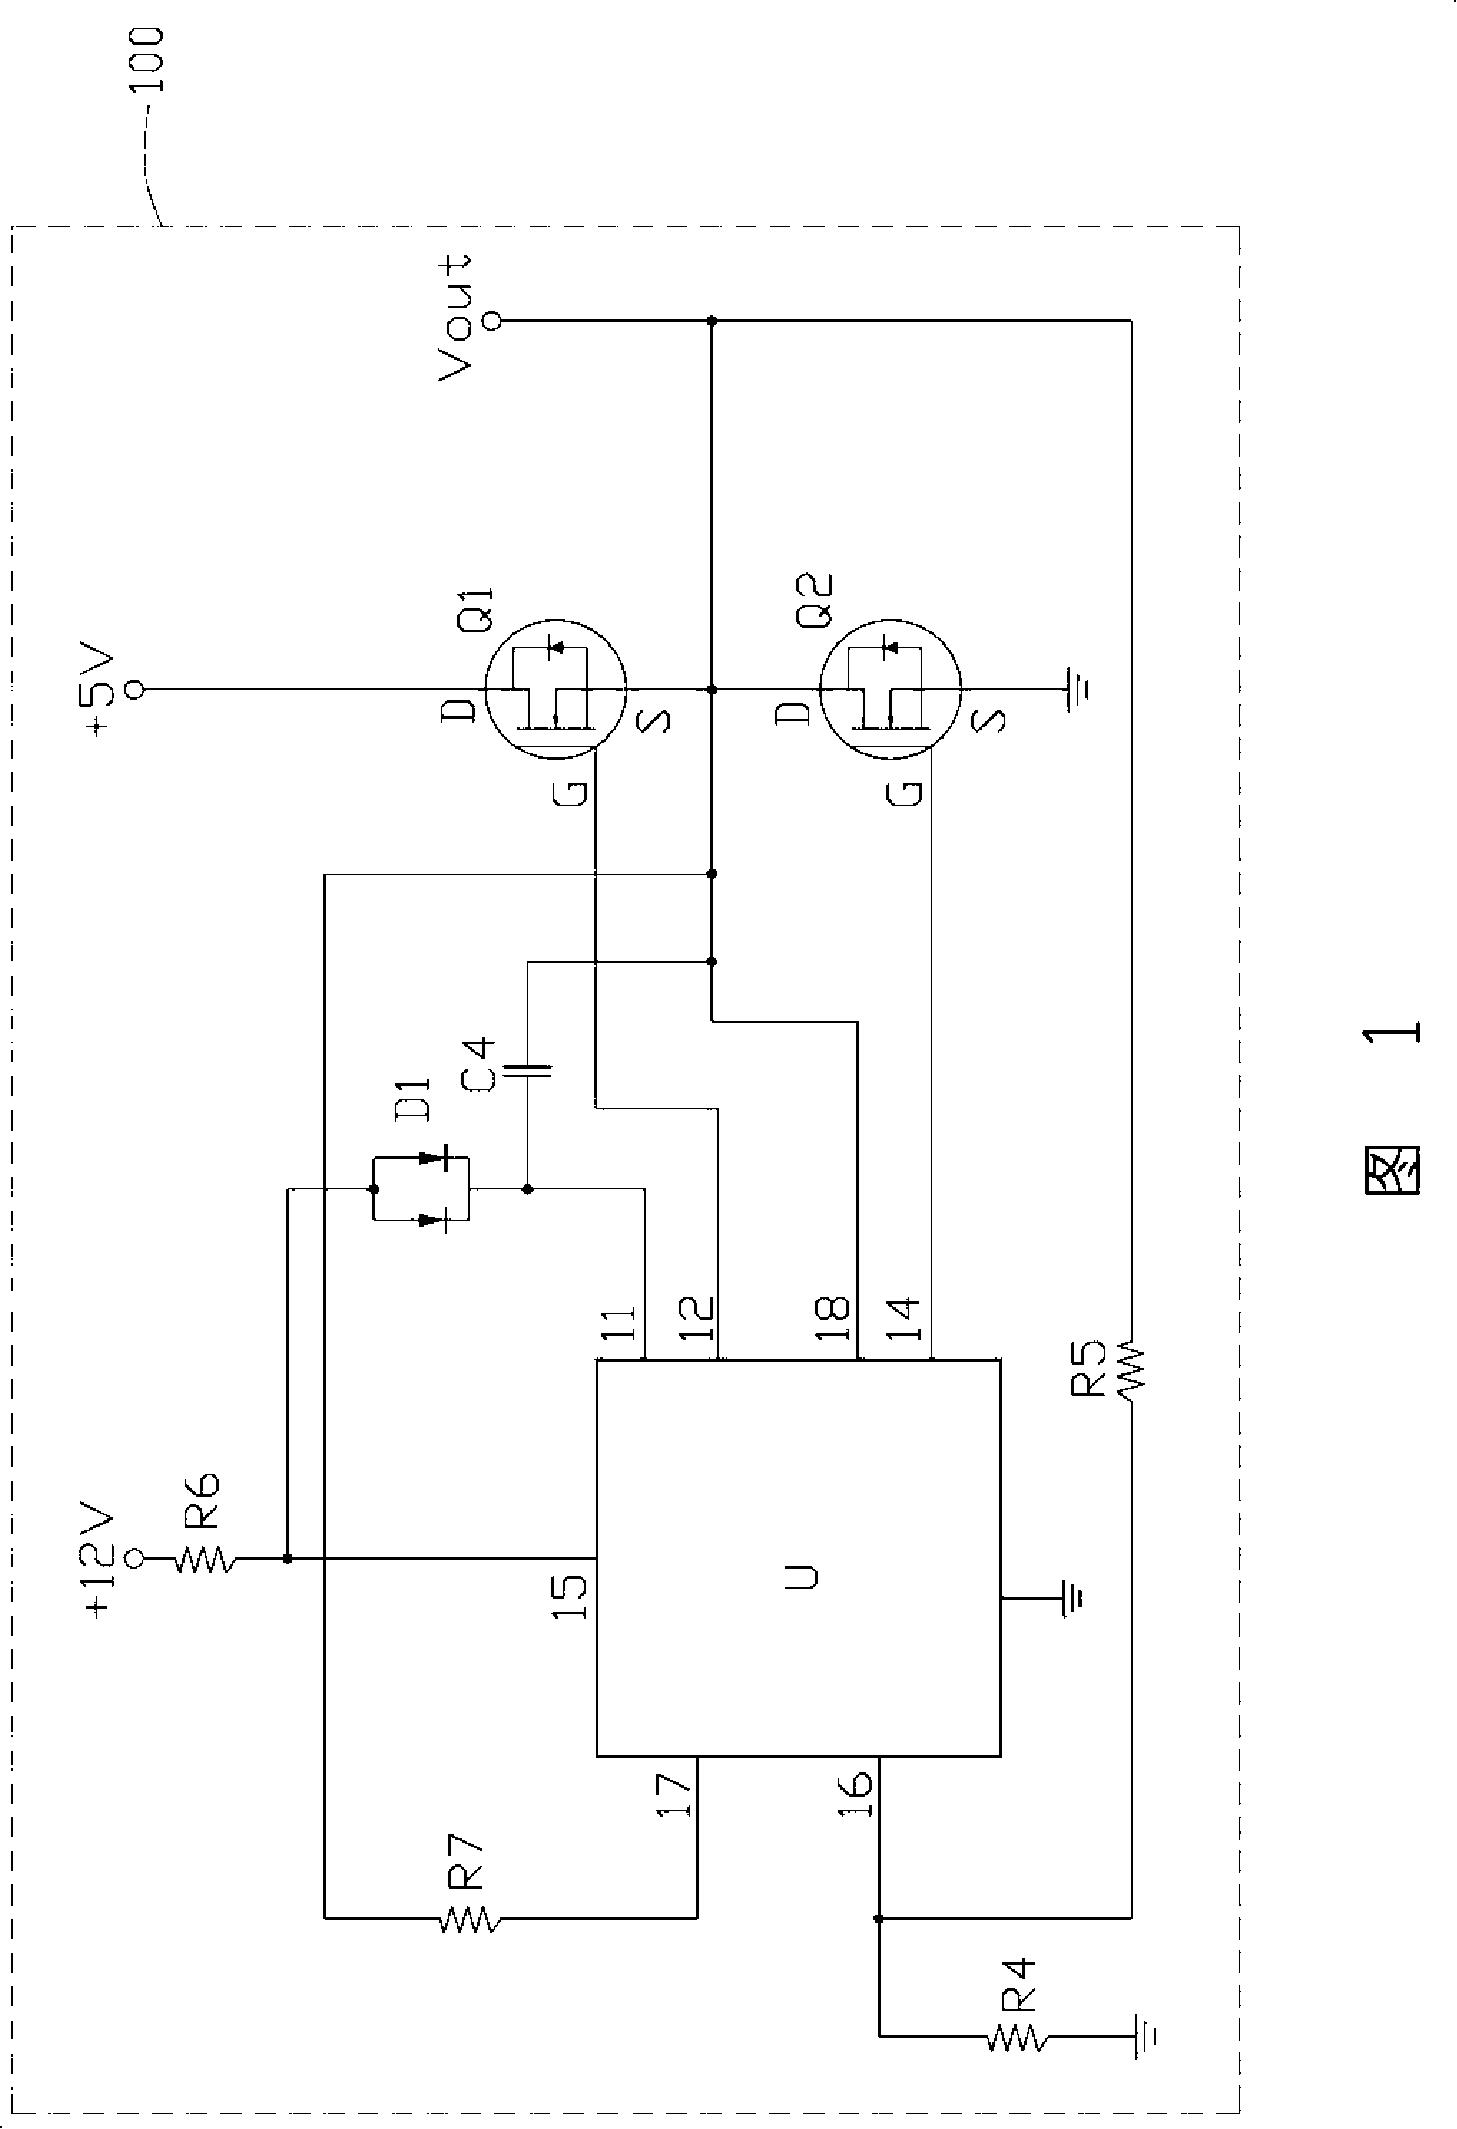 Feed circuit of mainboard